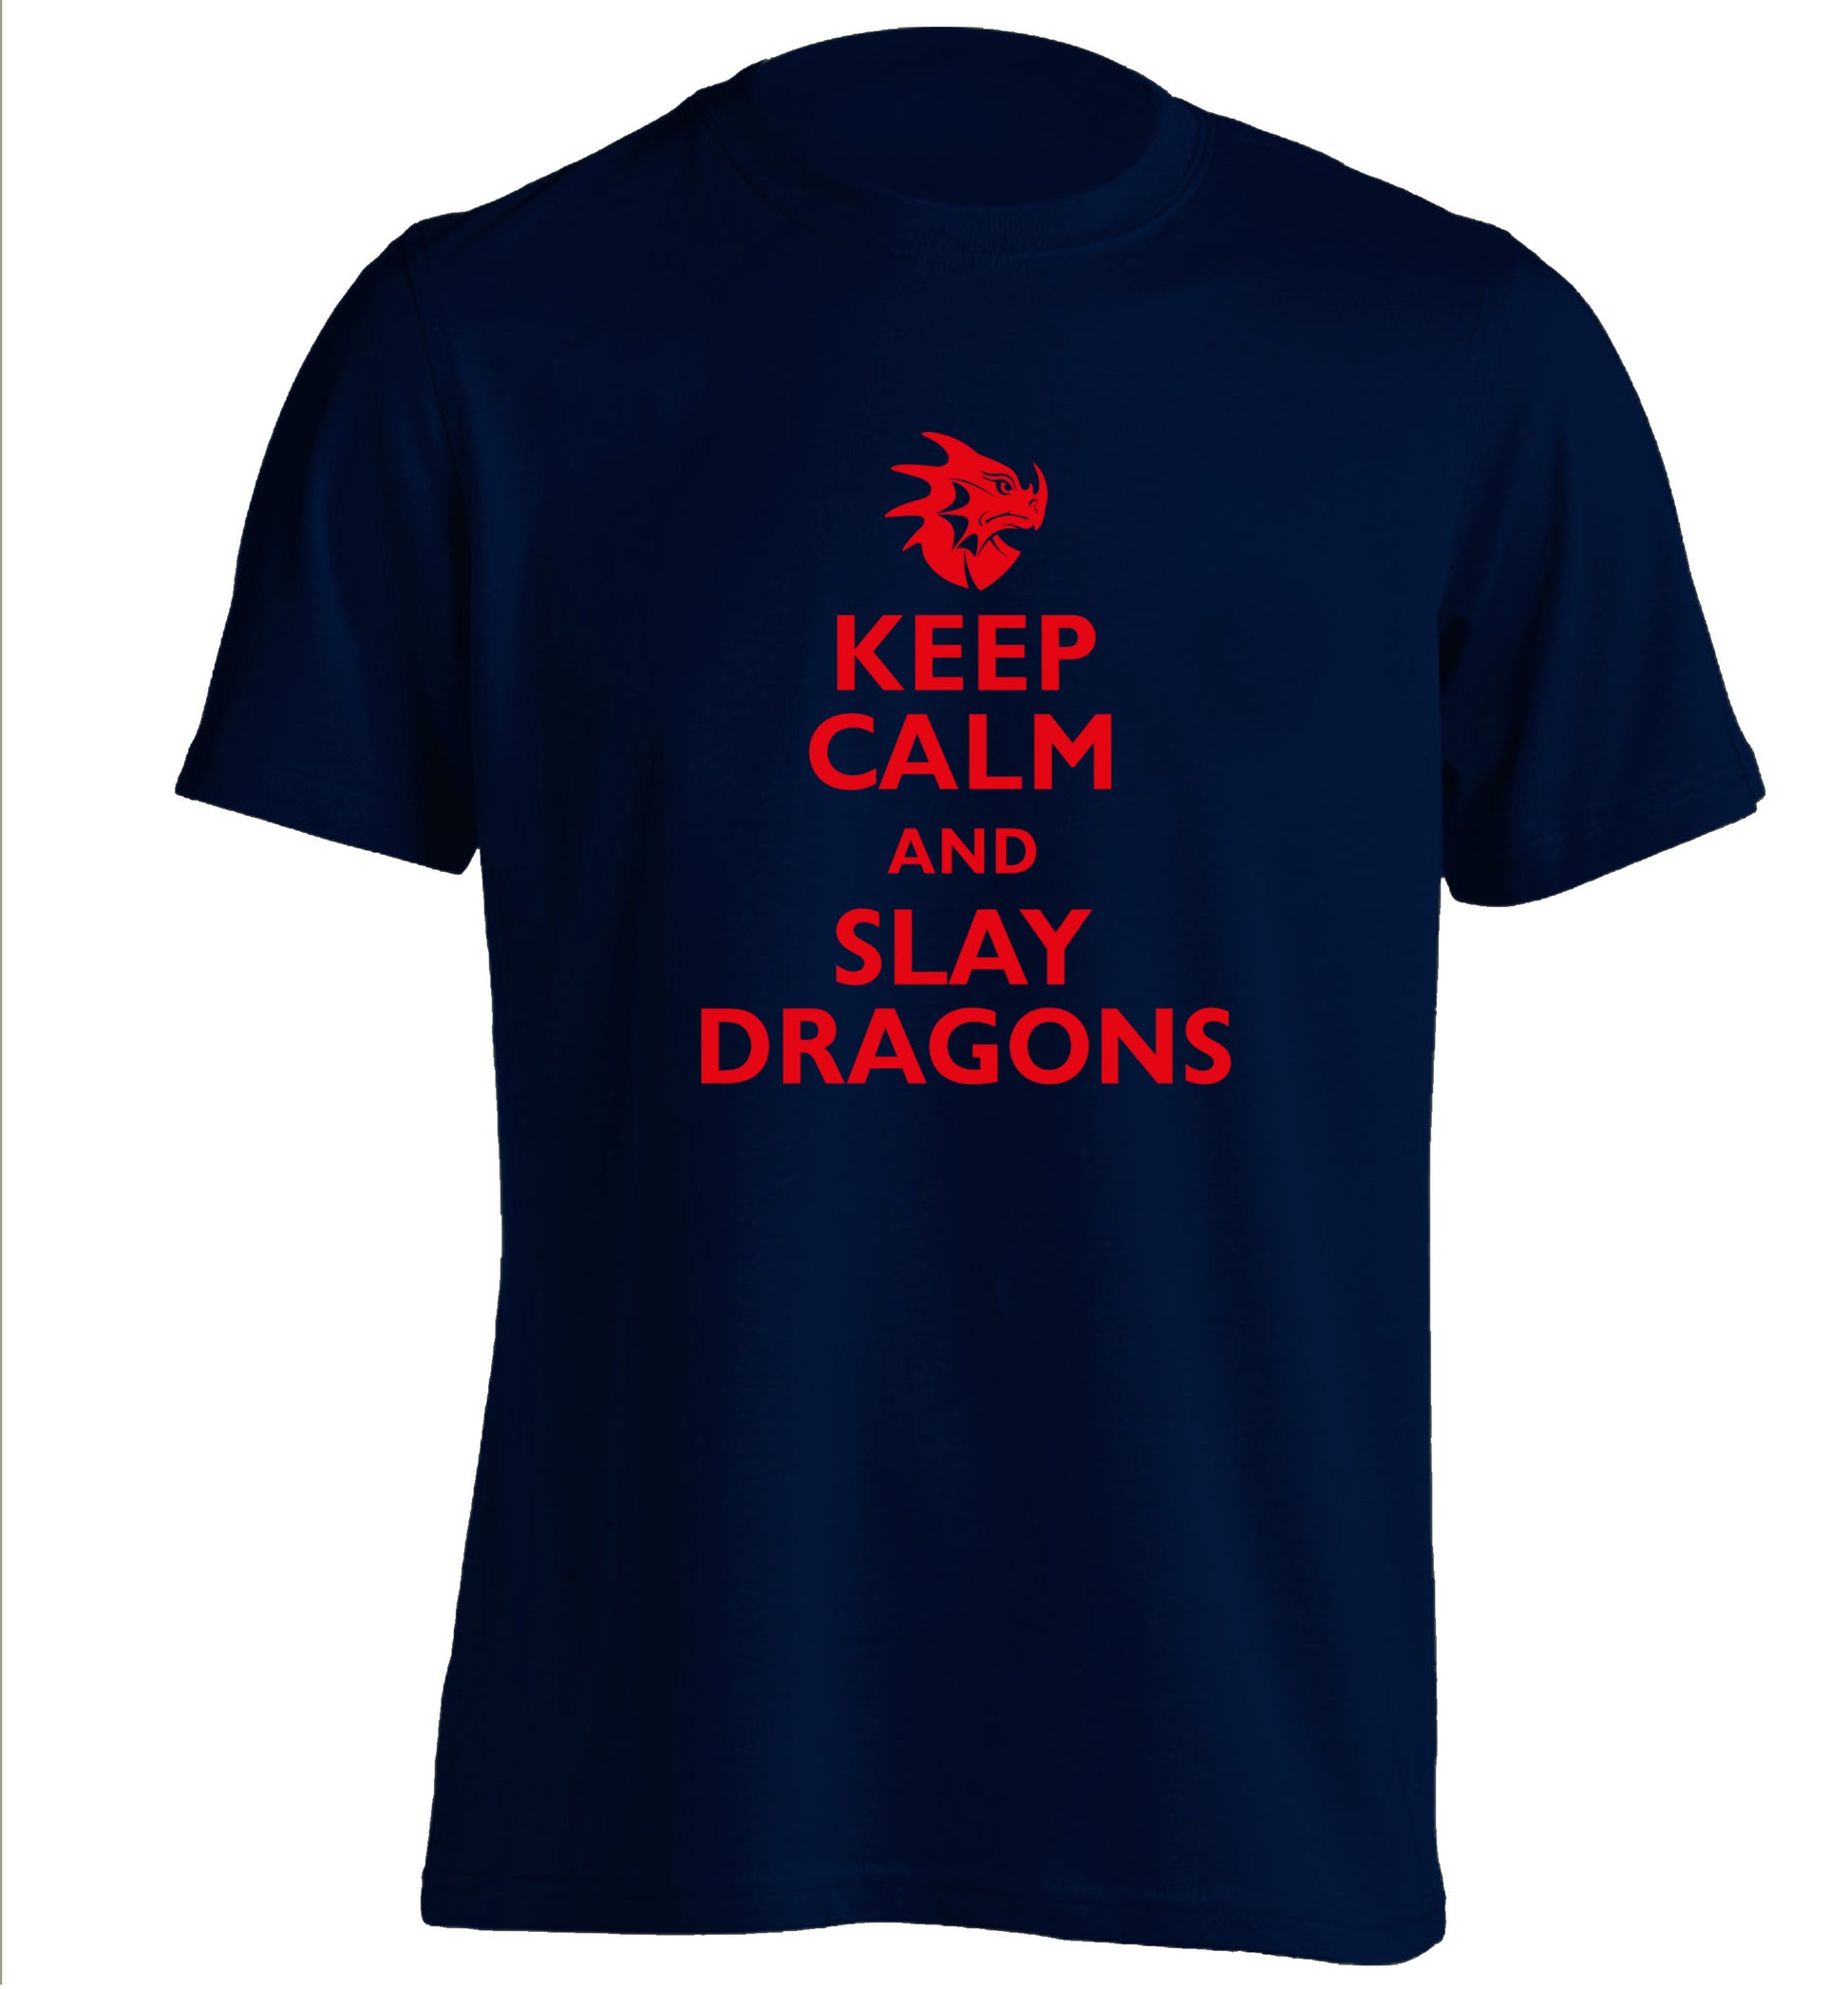 Keep calm and slay dragons adults unisex navy Tshirt 2XL